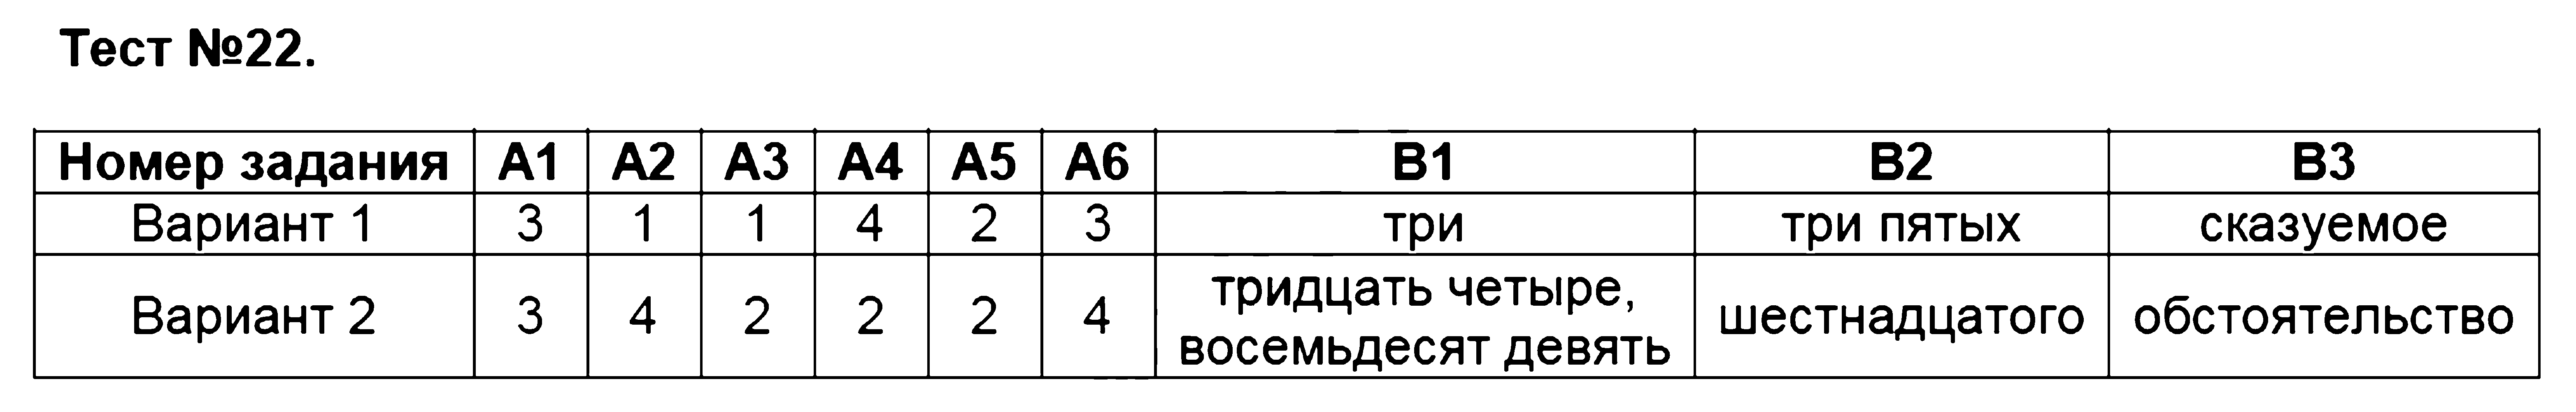 ГДЗ Русский язык 6 класс - Тест 22